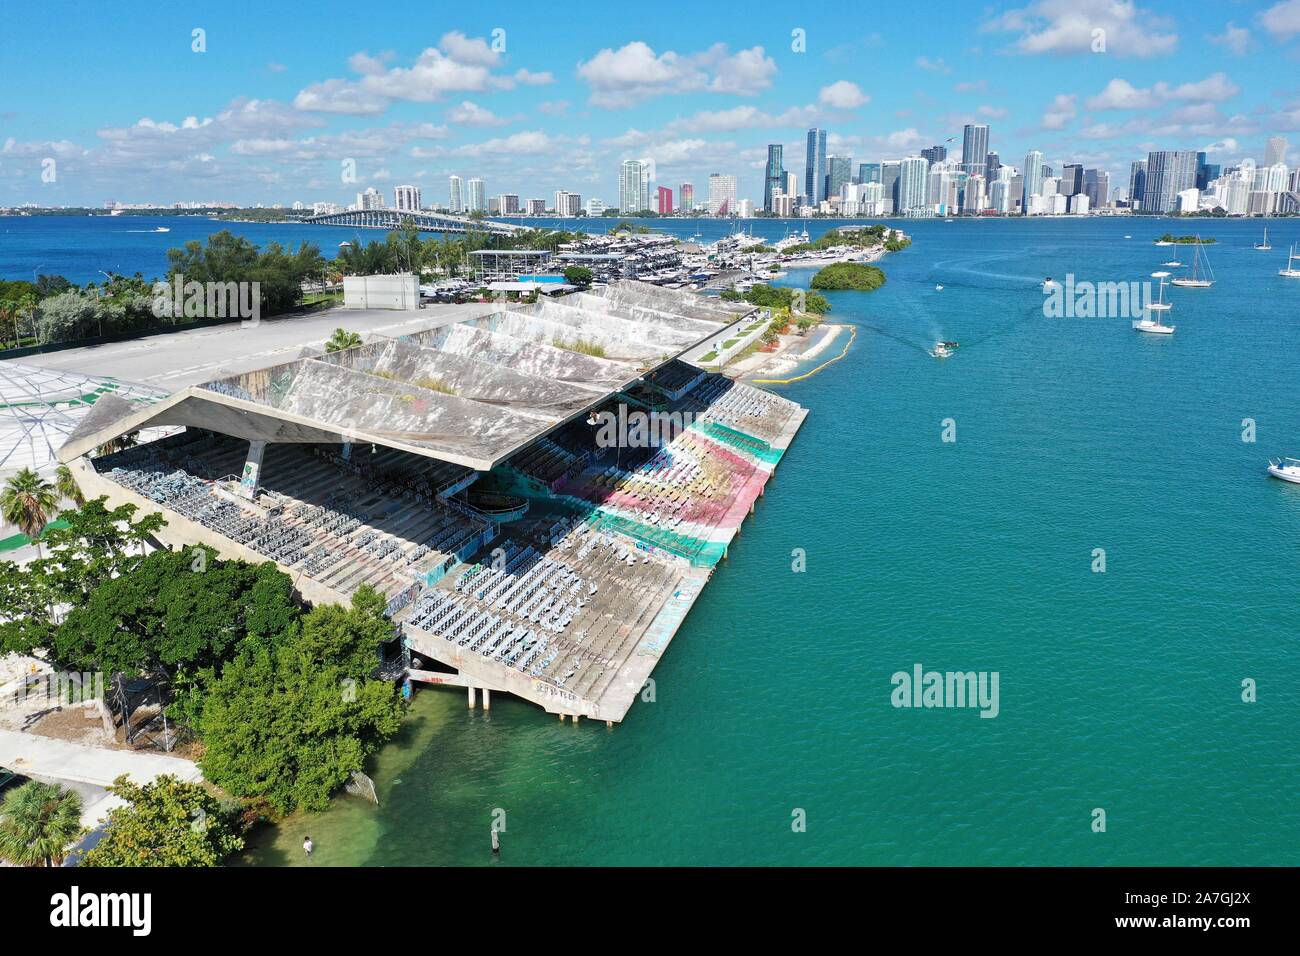 Miami Marine Stadium upon completion in 1963 on Virginia Key, Miami, Fla. –  Florida's Big Dig